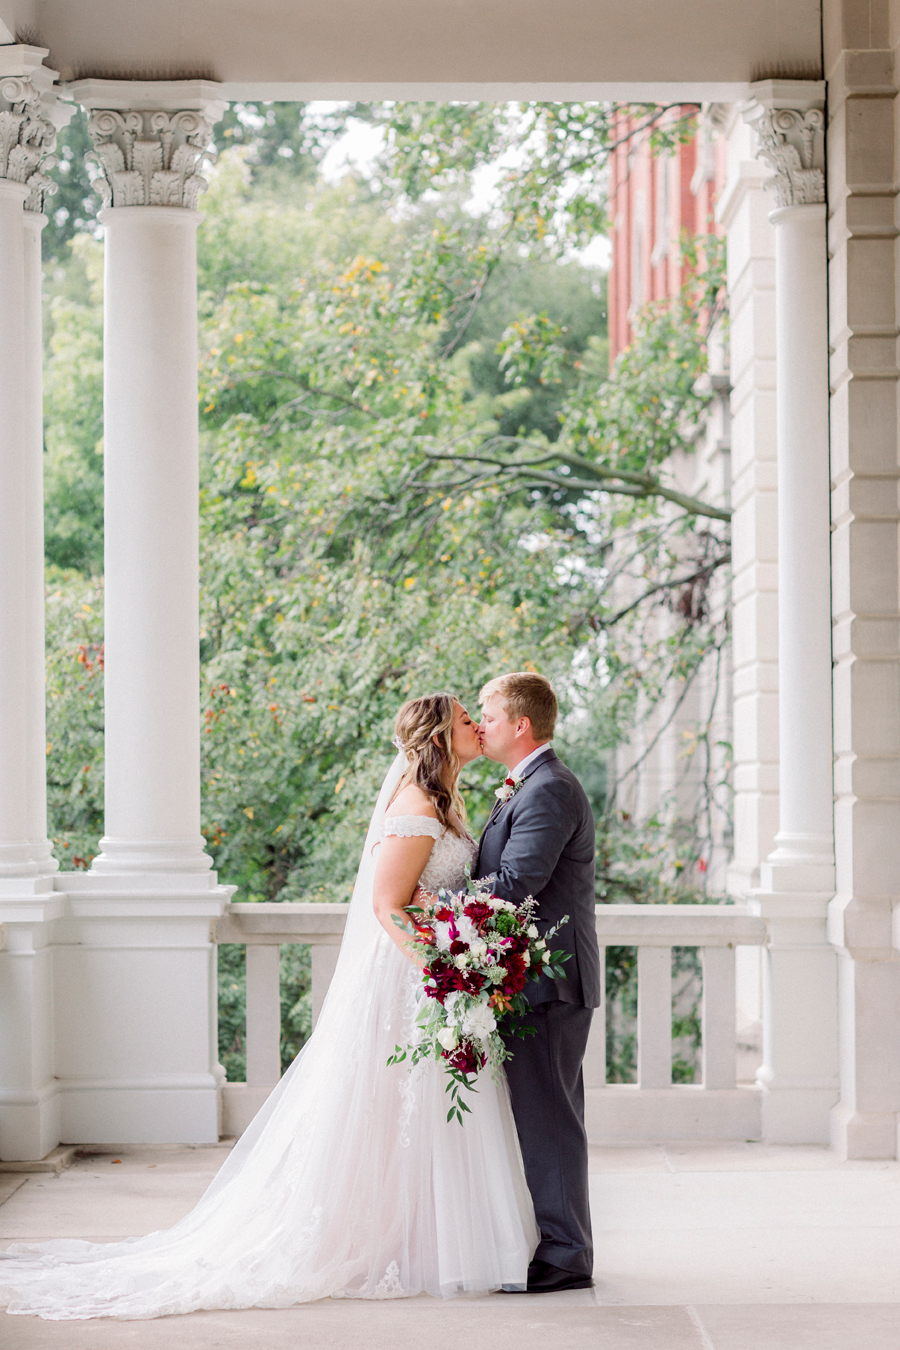 A beautiful wedding in Columbia, Missouri by Love Tree Studios